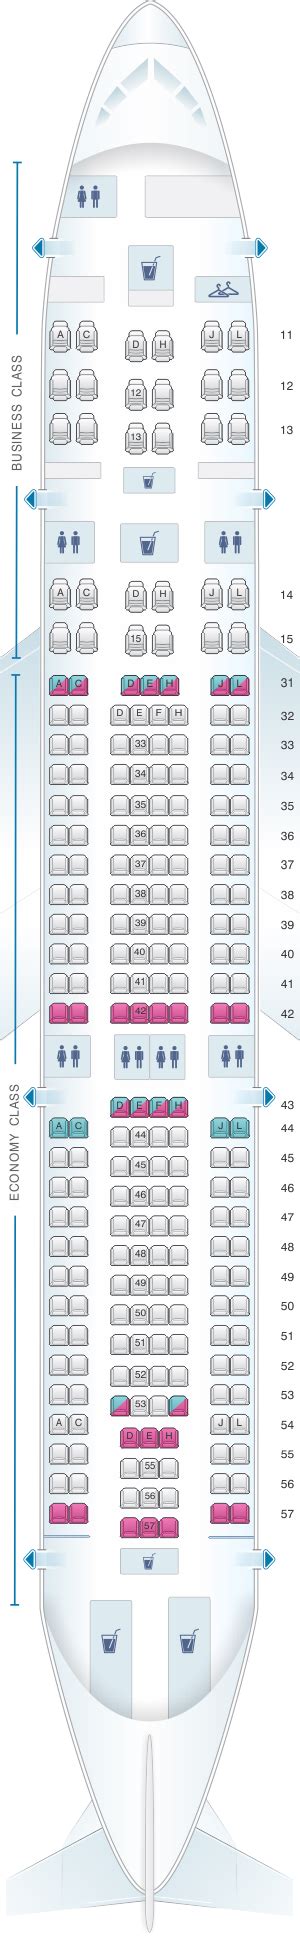 Seat Map Air China Airbus A330 200 237pax Seatmaestro